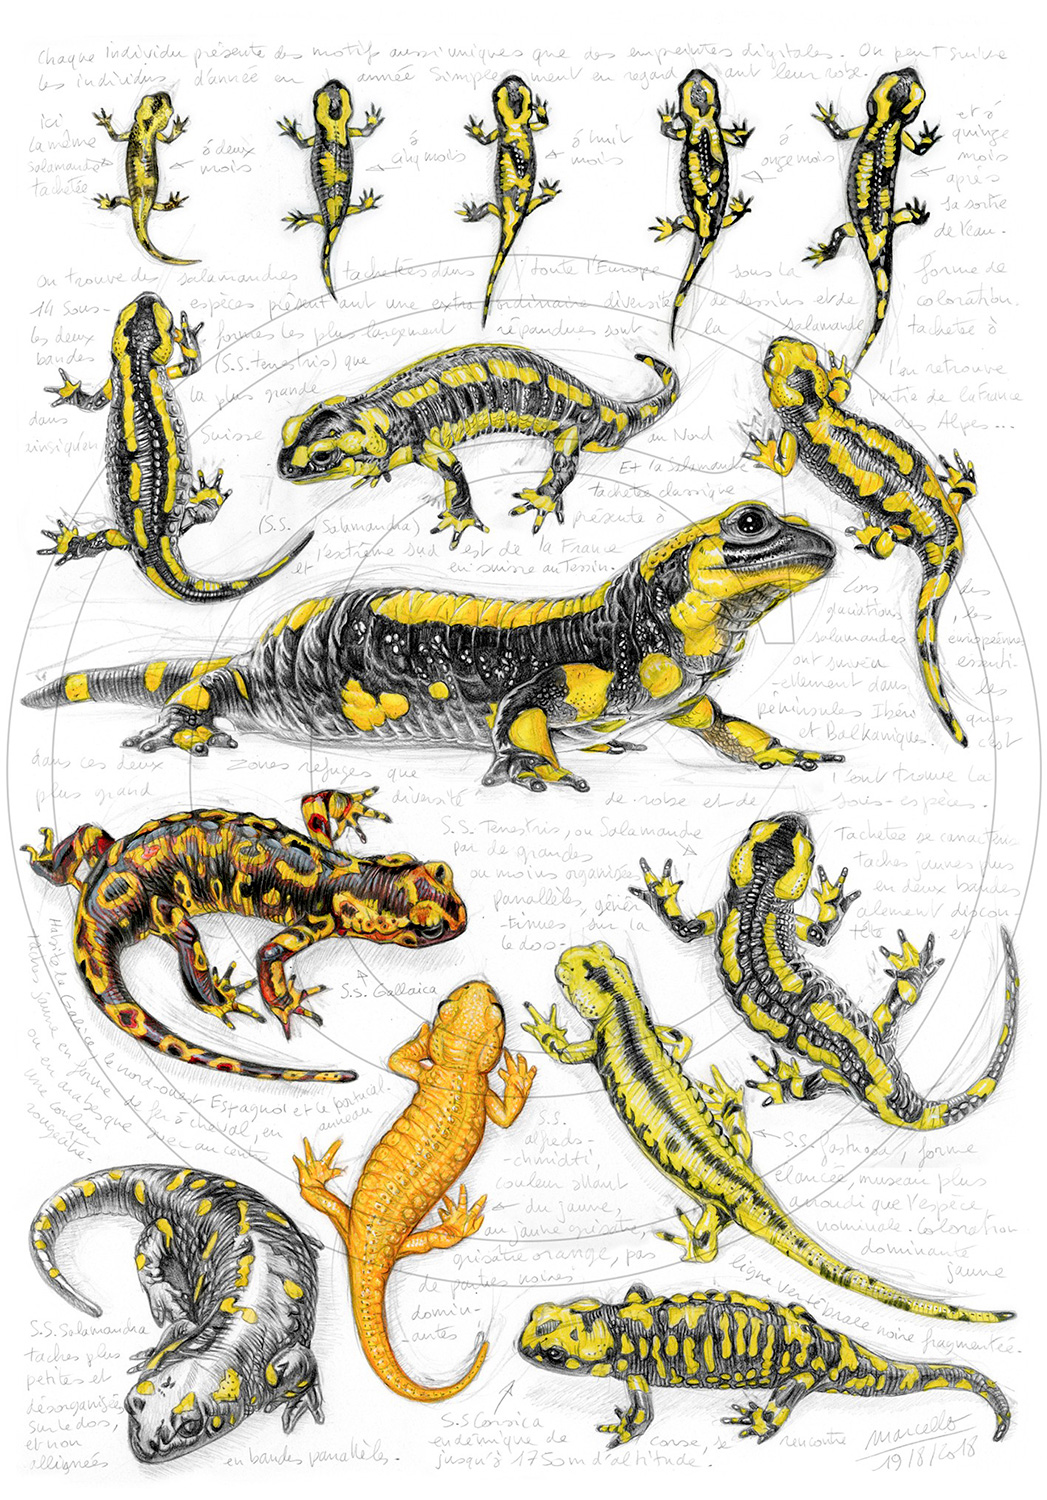 Marcello-art: Fauna temperate zone 383 - Salamanders subspecies